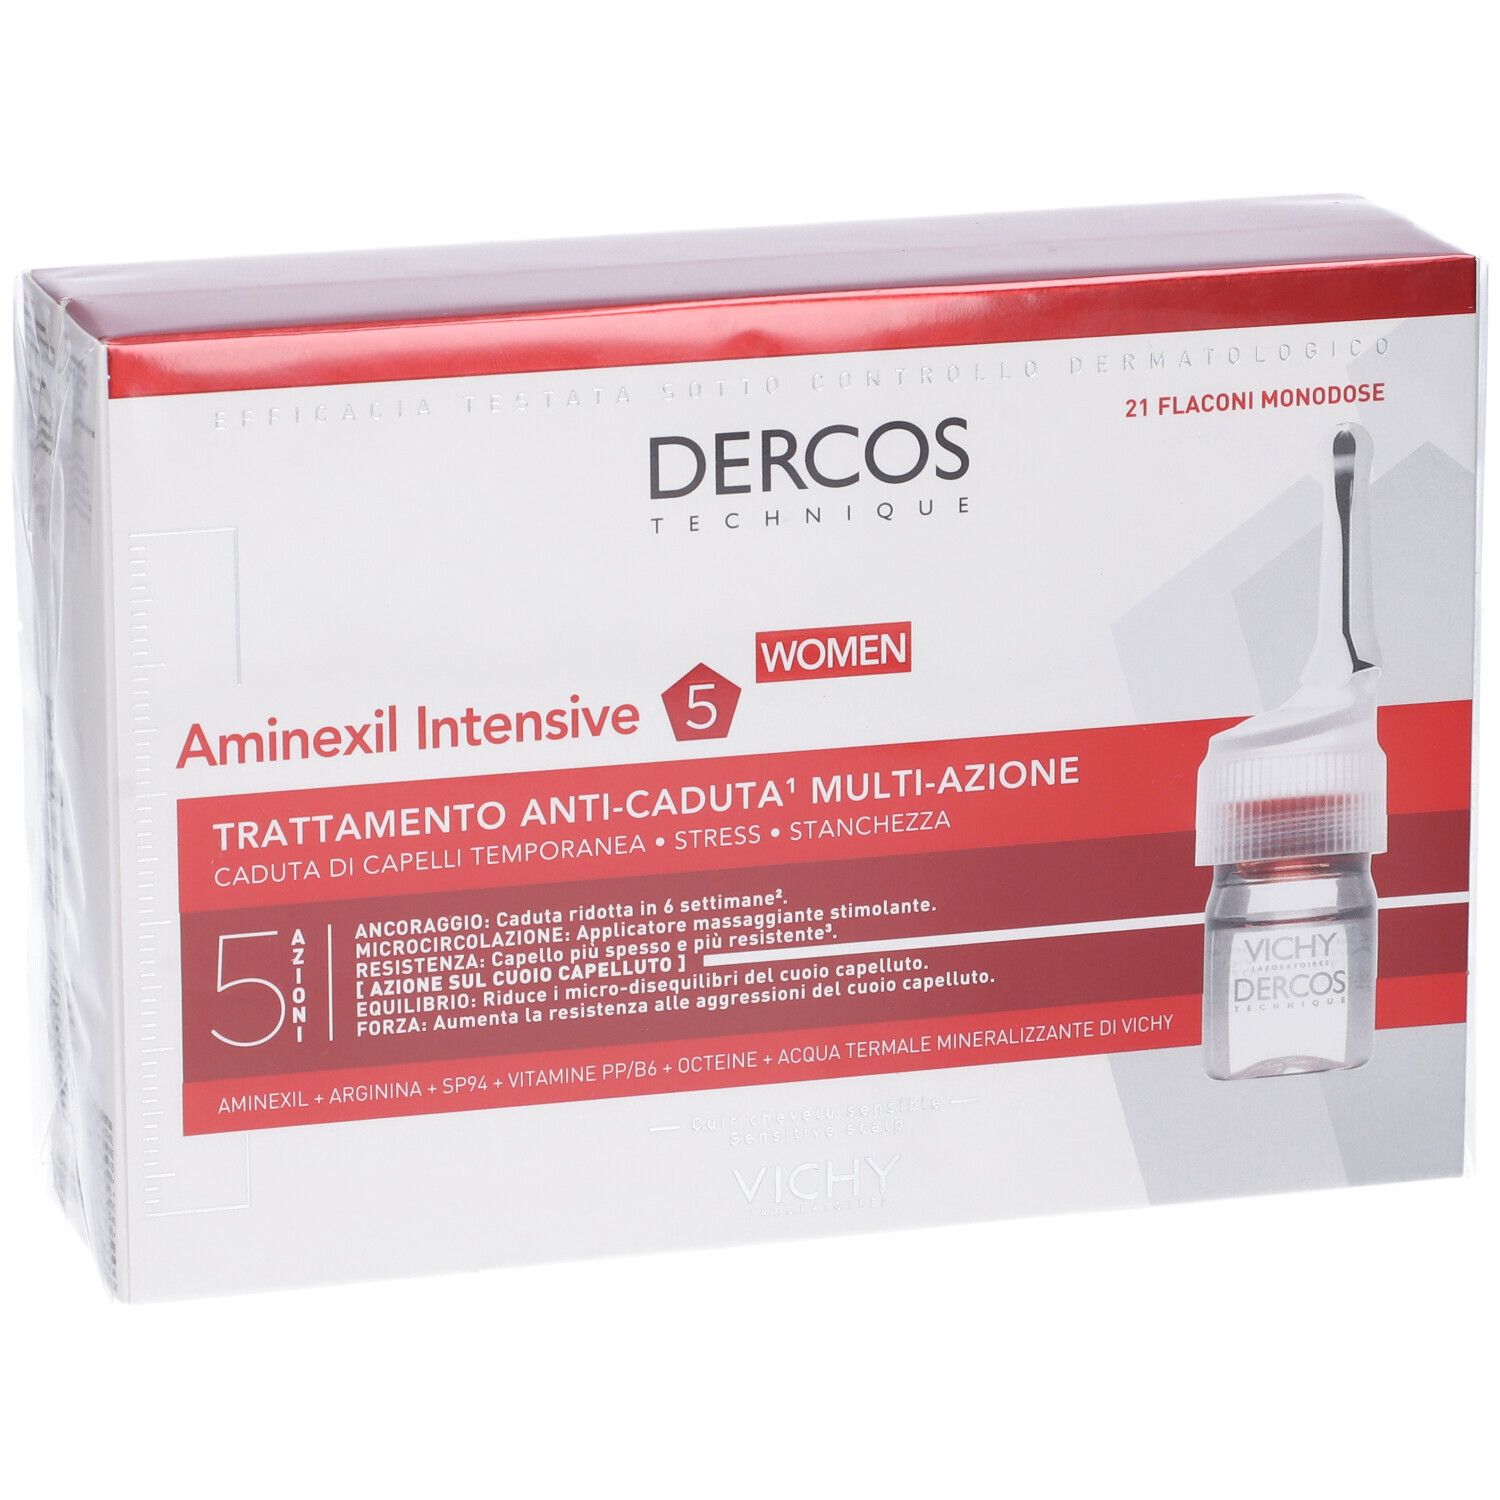 Vichy Dercos Aminexil trattamento anticaduta donna 21 fiale 21 x 6 ml